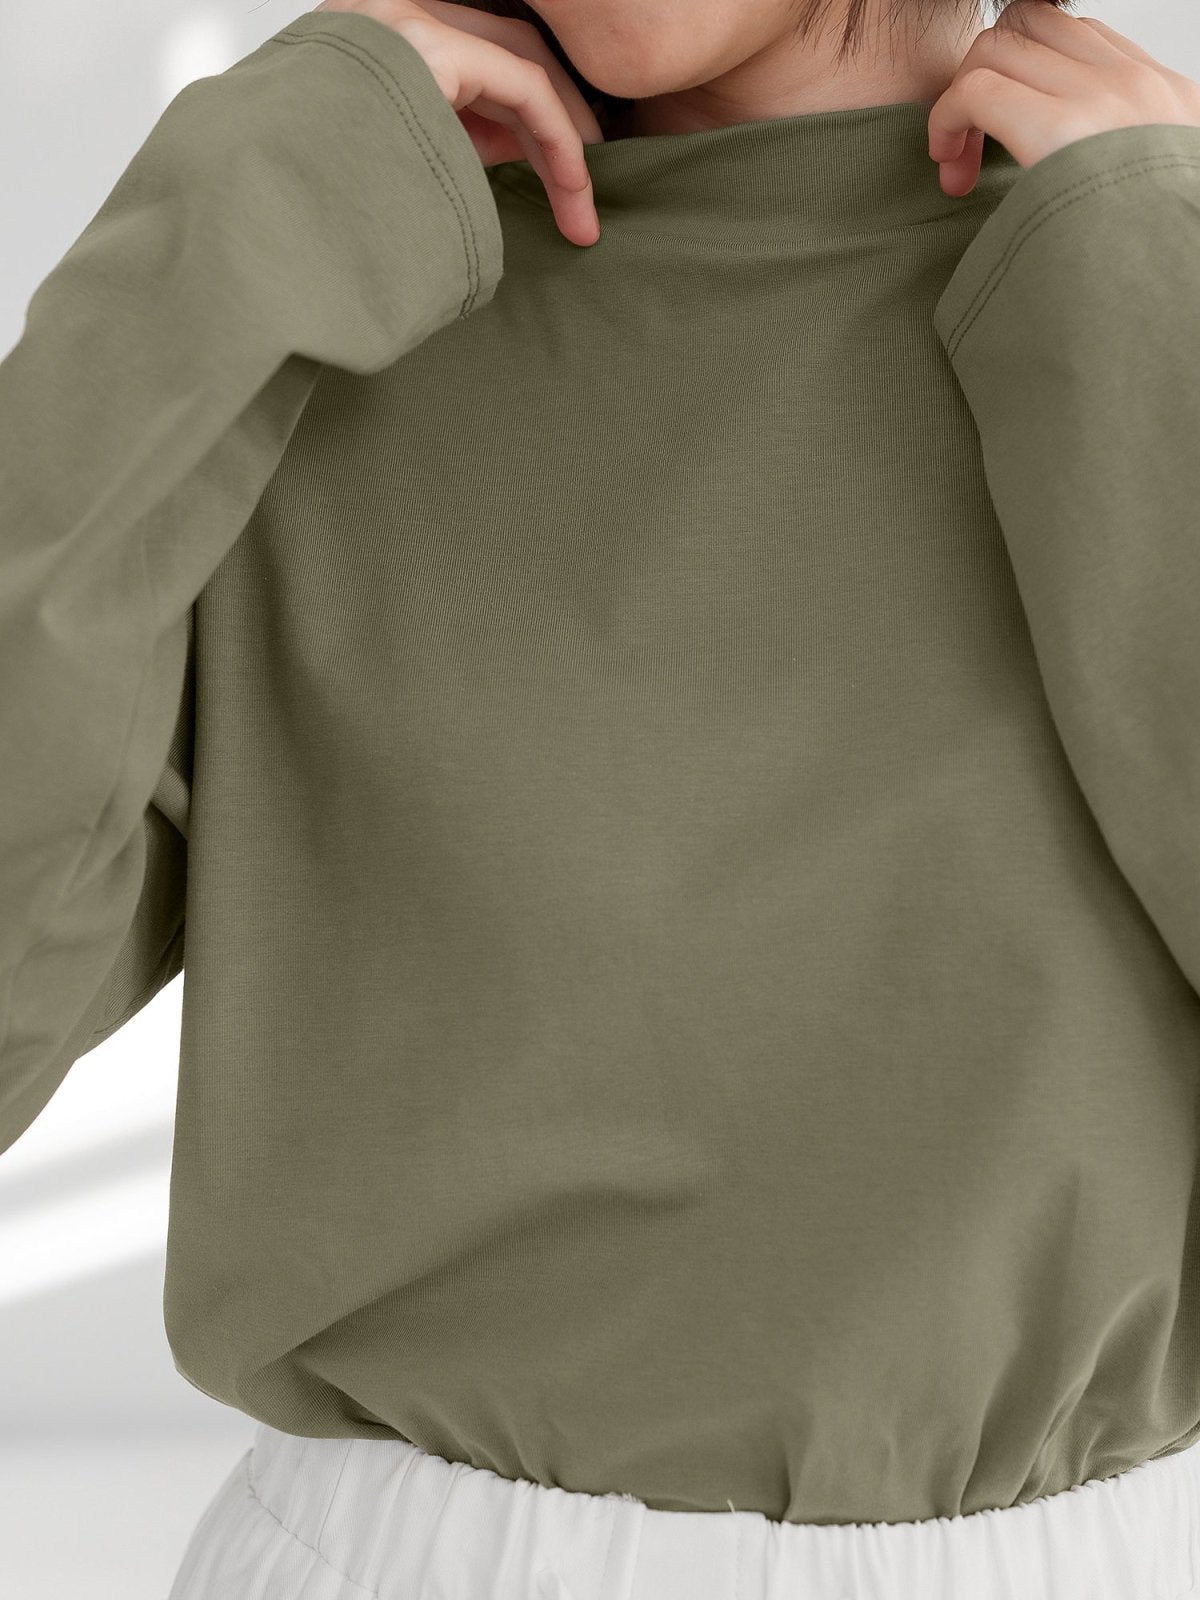 Esther Funnel Neck Long Sleeve Top - DAG-DD1118-23MatchaGreenS - Matcha Green - S - D'zage Designs